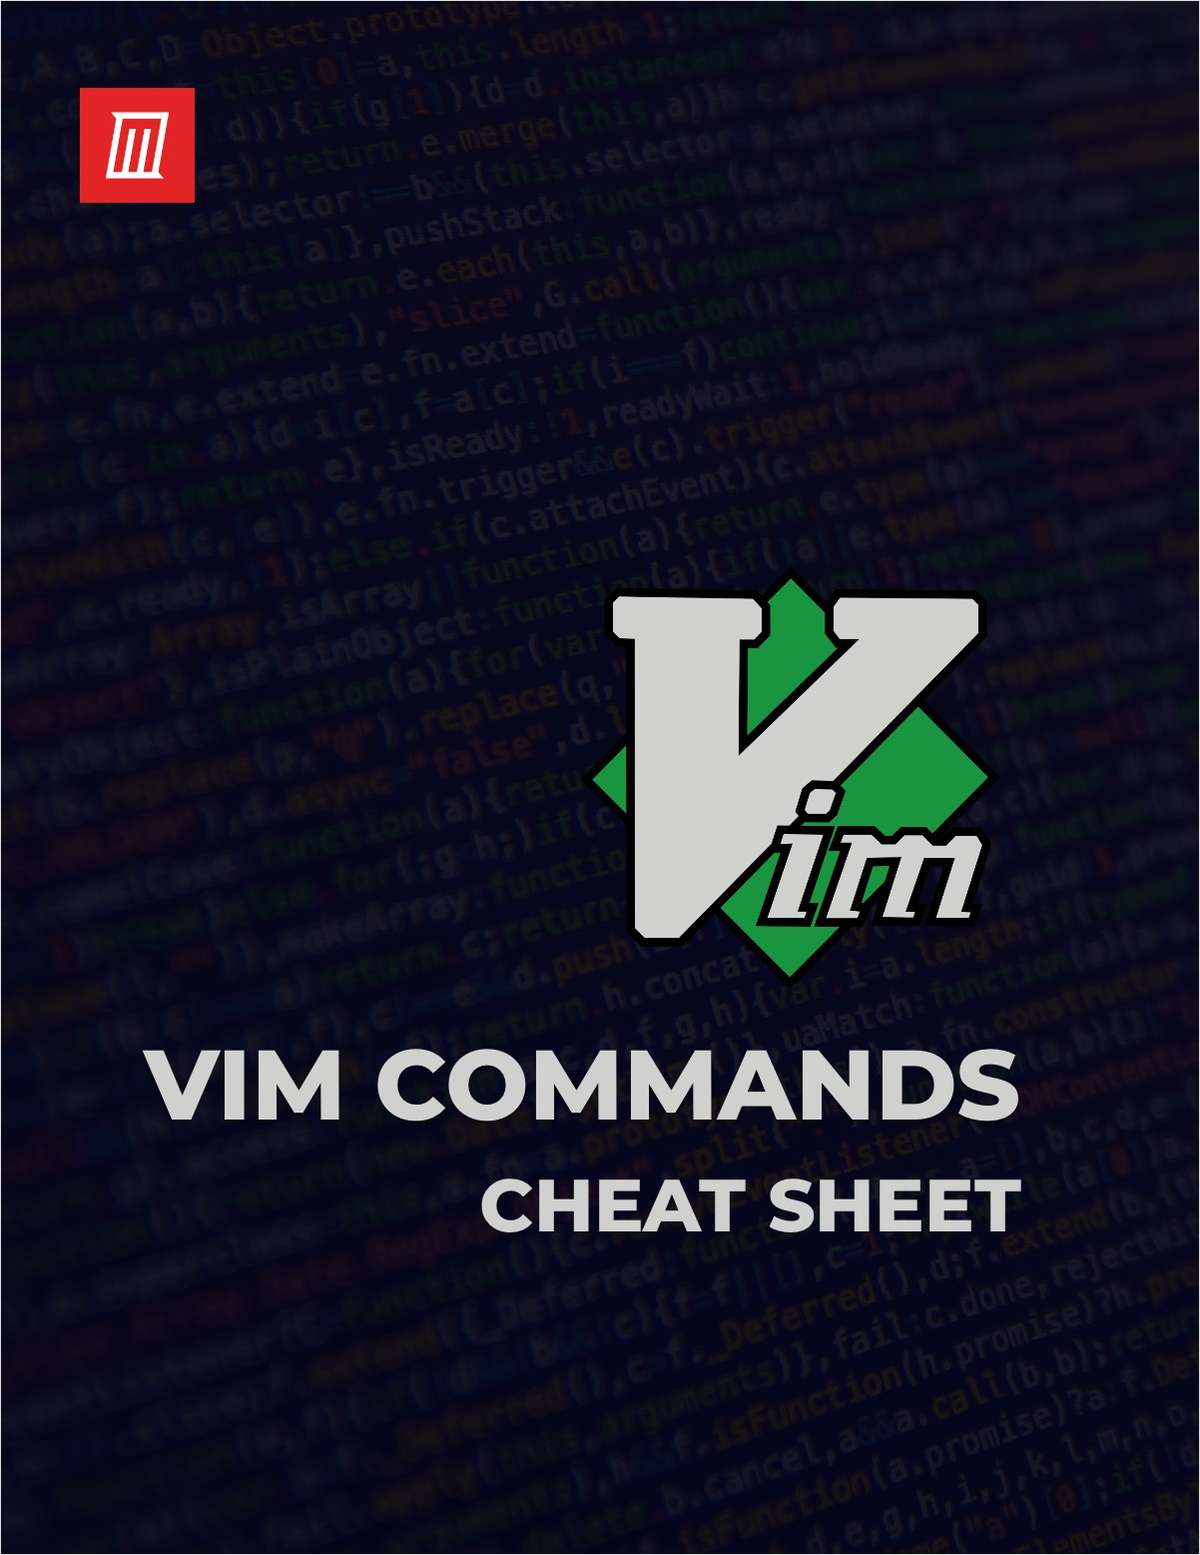 Essential Vim Commands Cheat Sheet